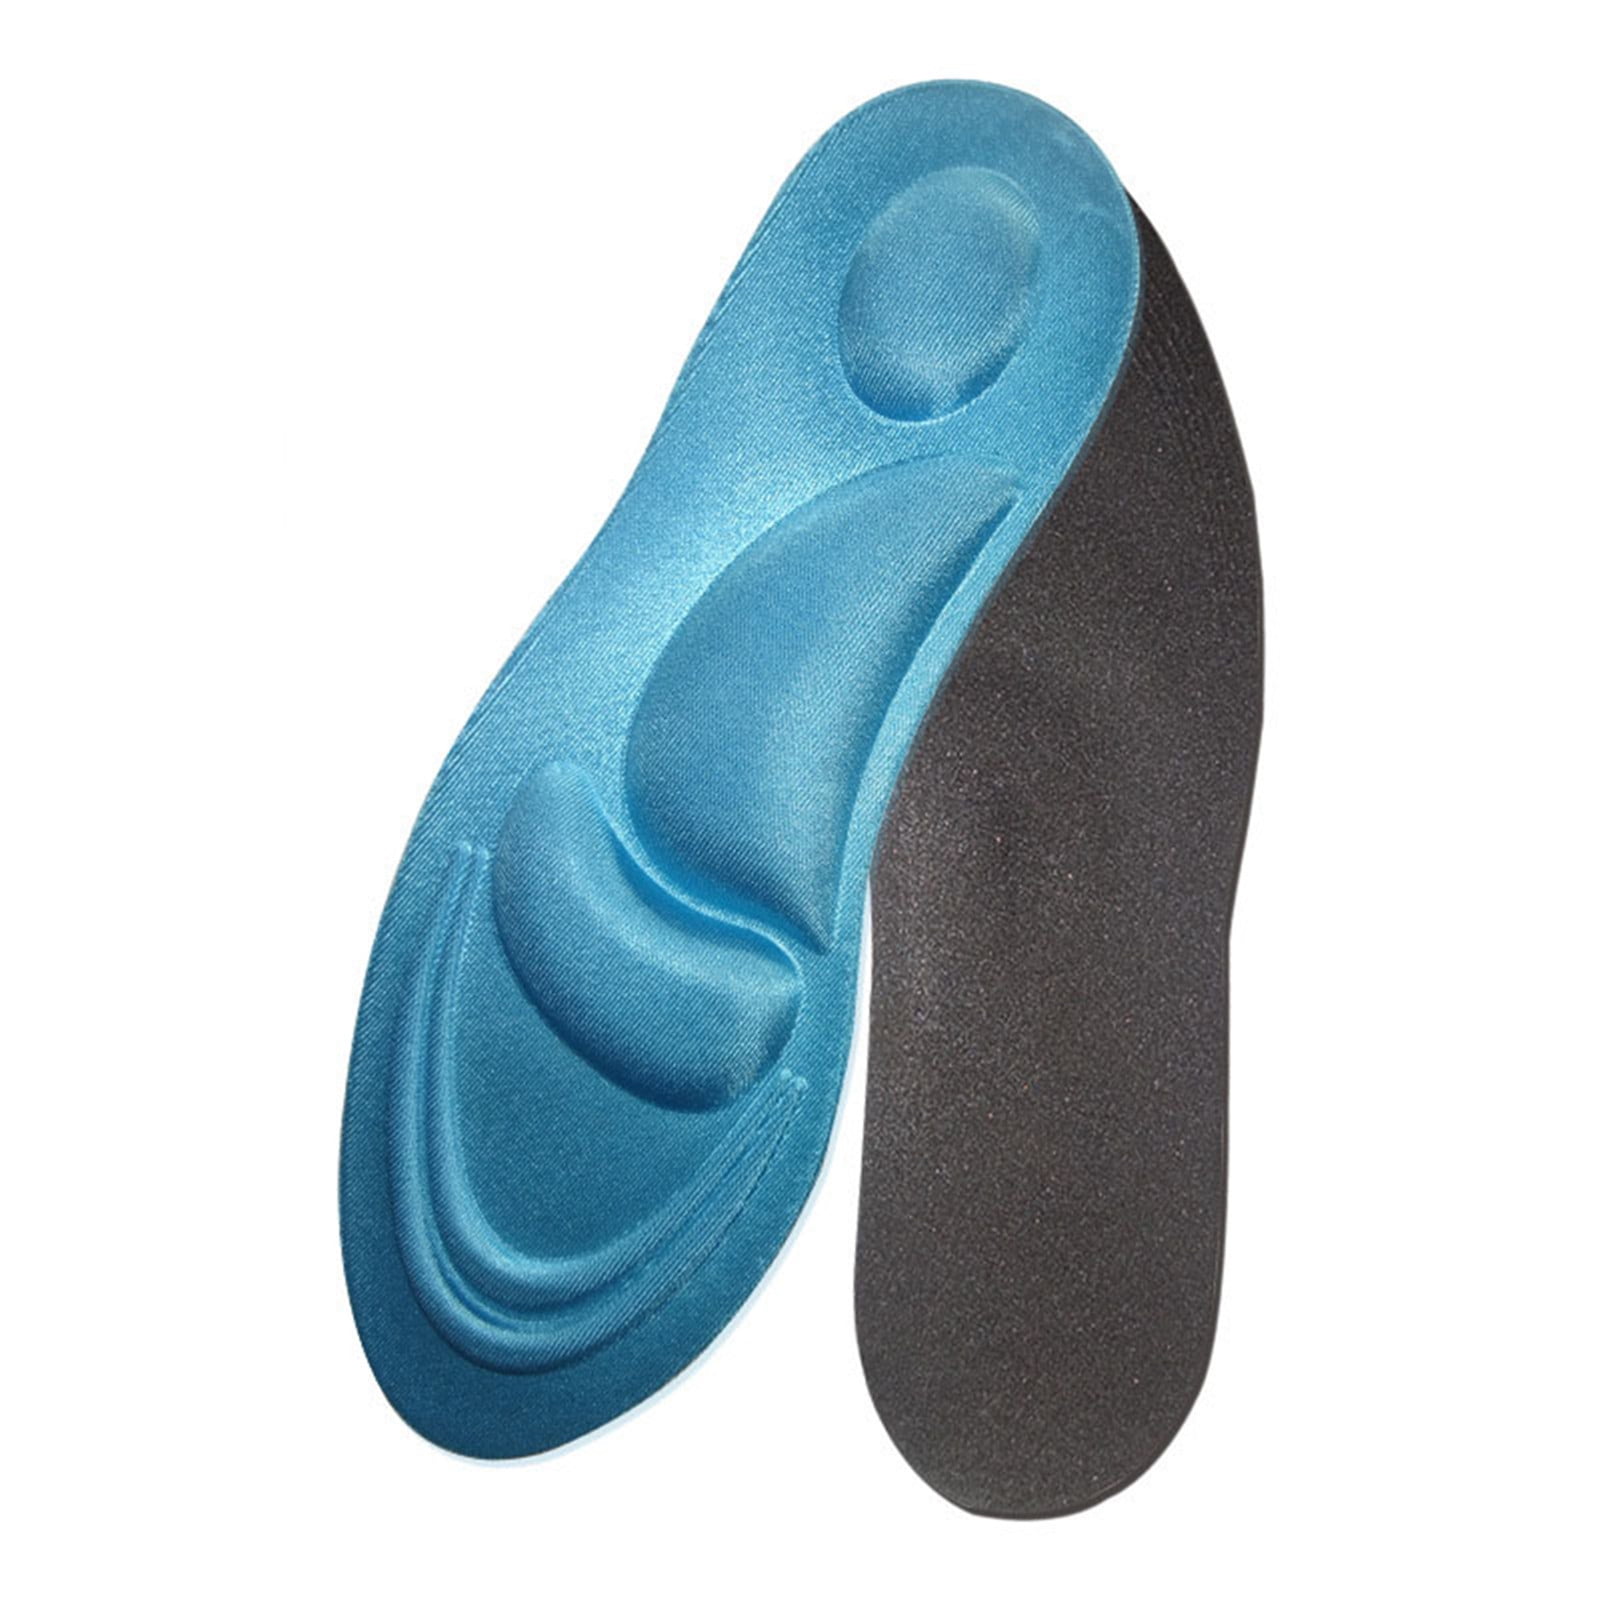 4D sponge soft insole comfort high heel shoe pad pain relief insert cushion_WK 